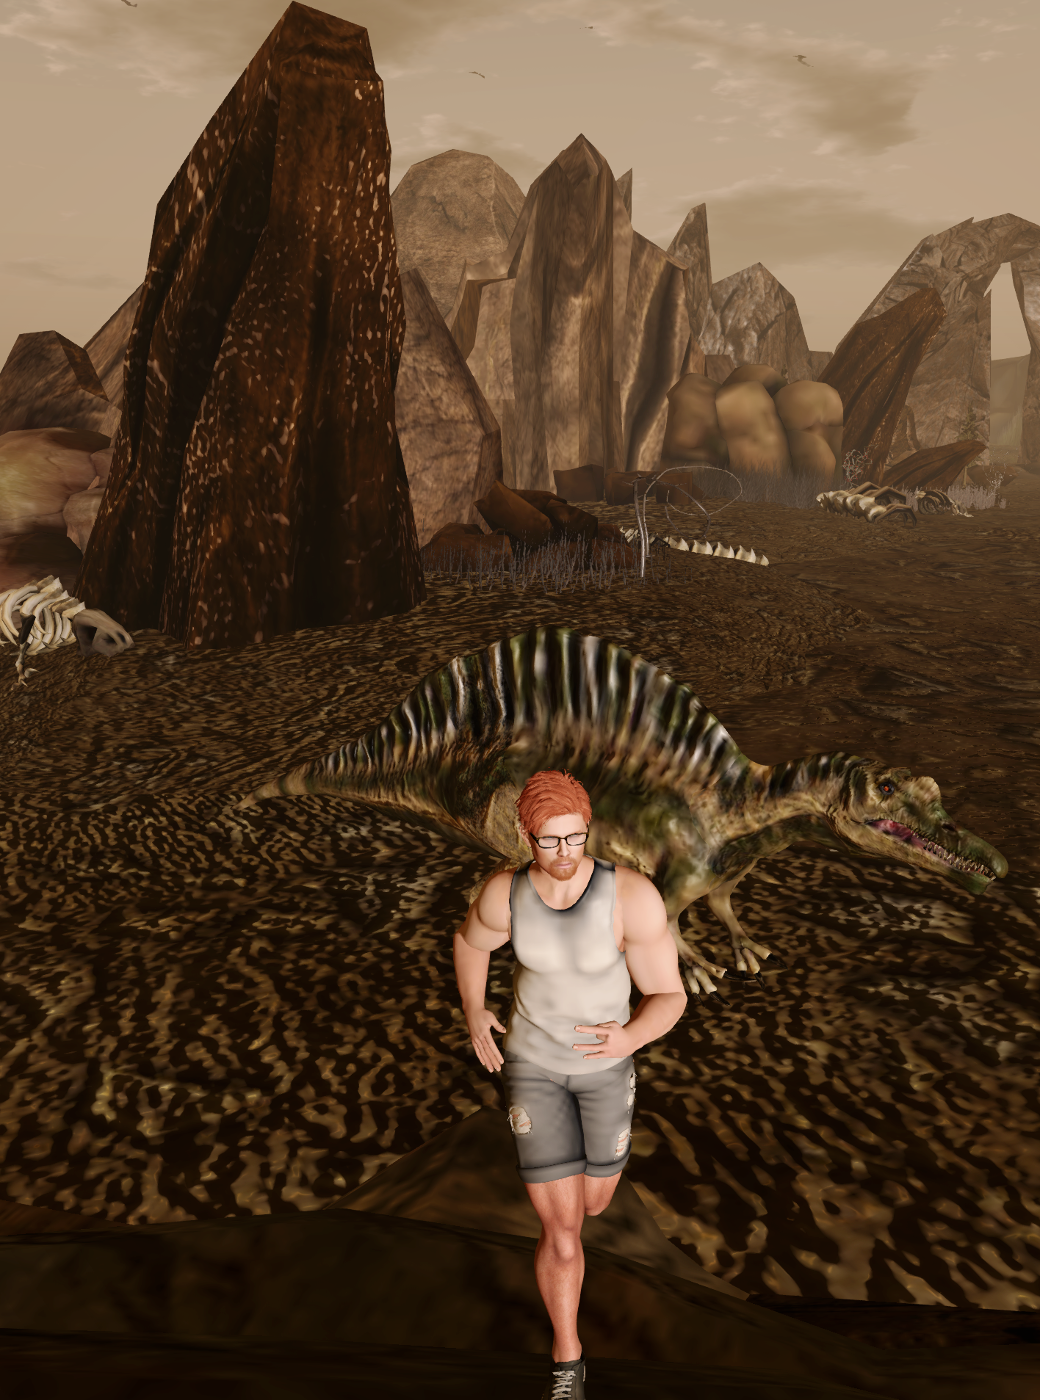 Running away from the Spinosaurus